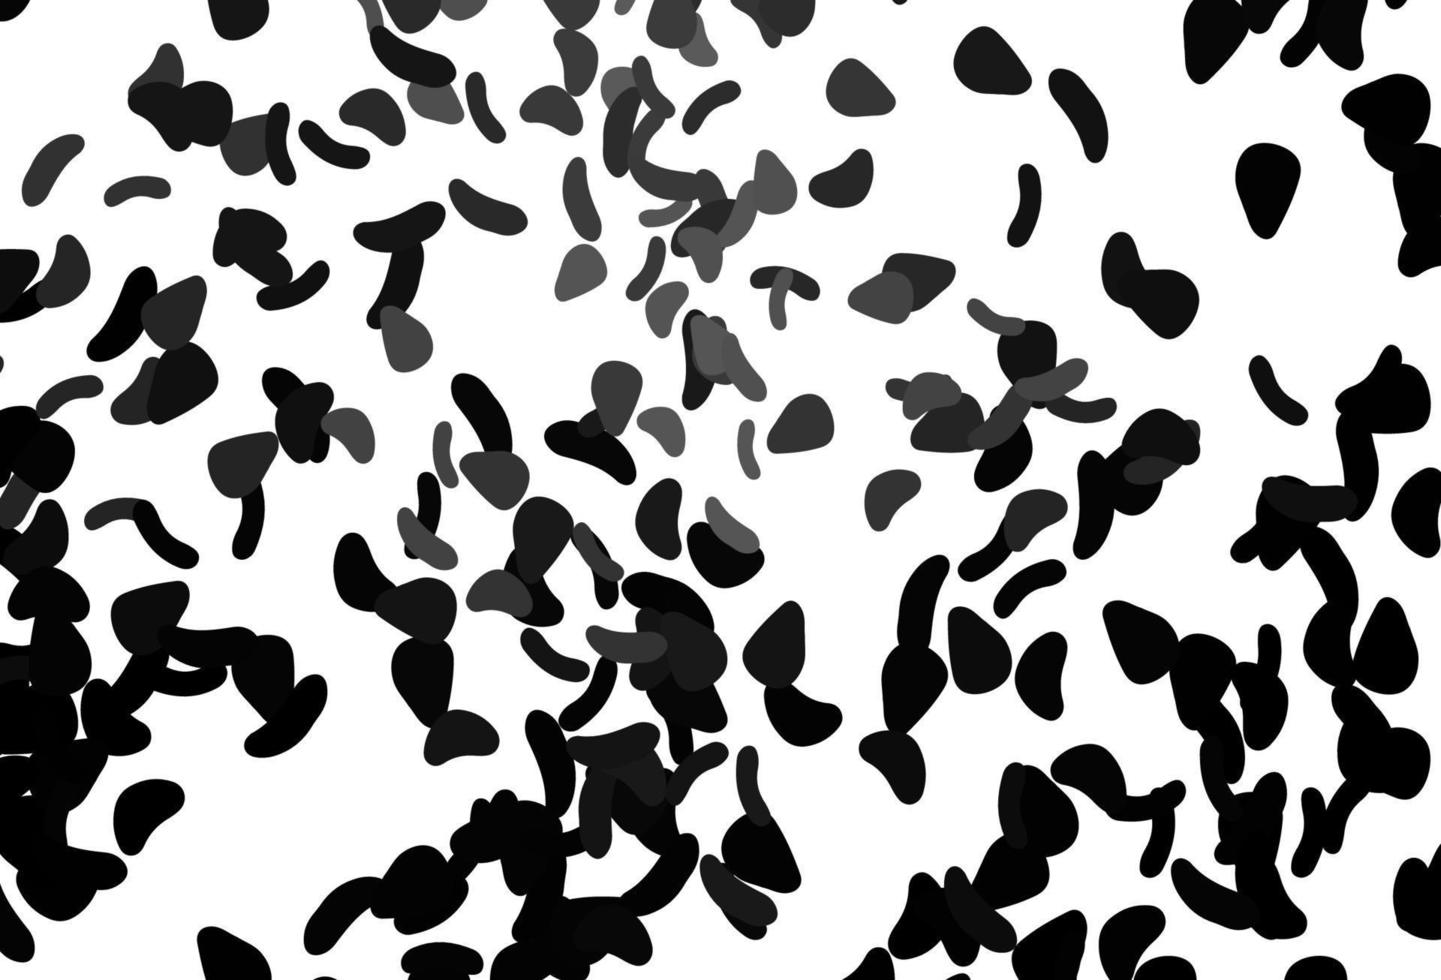 Light Black vector texture with random forms.